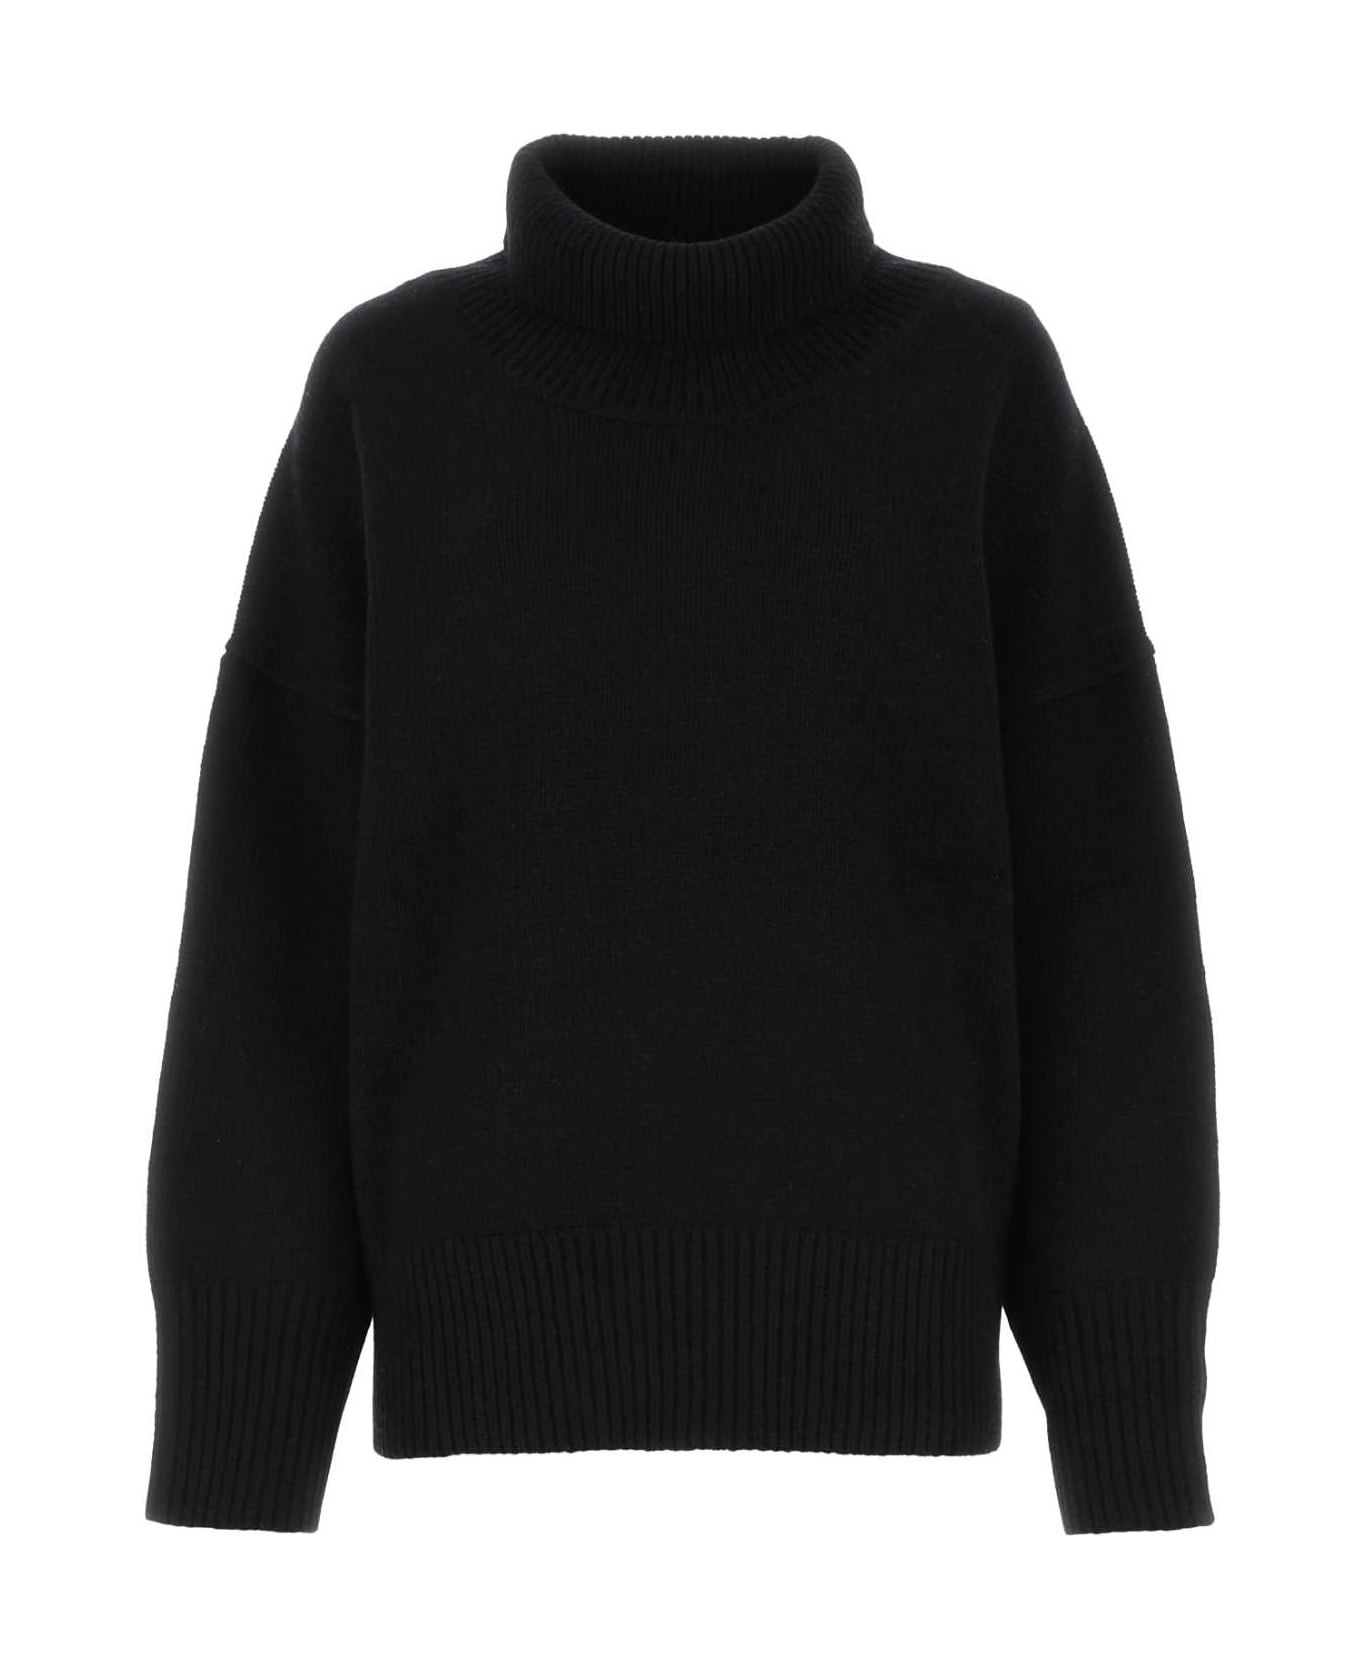 Chloé Black Cashmere Oversize Sweater - 001 ニットウェア